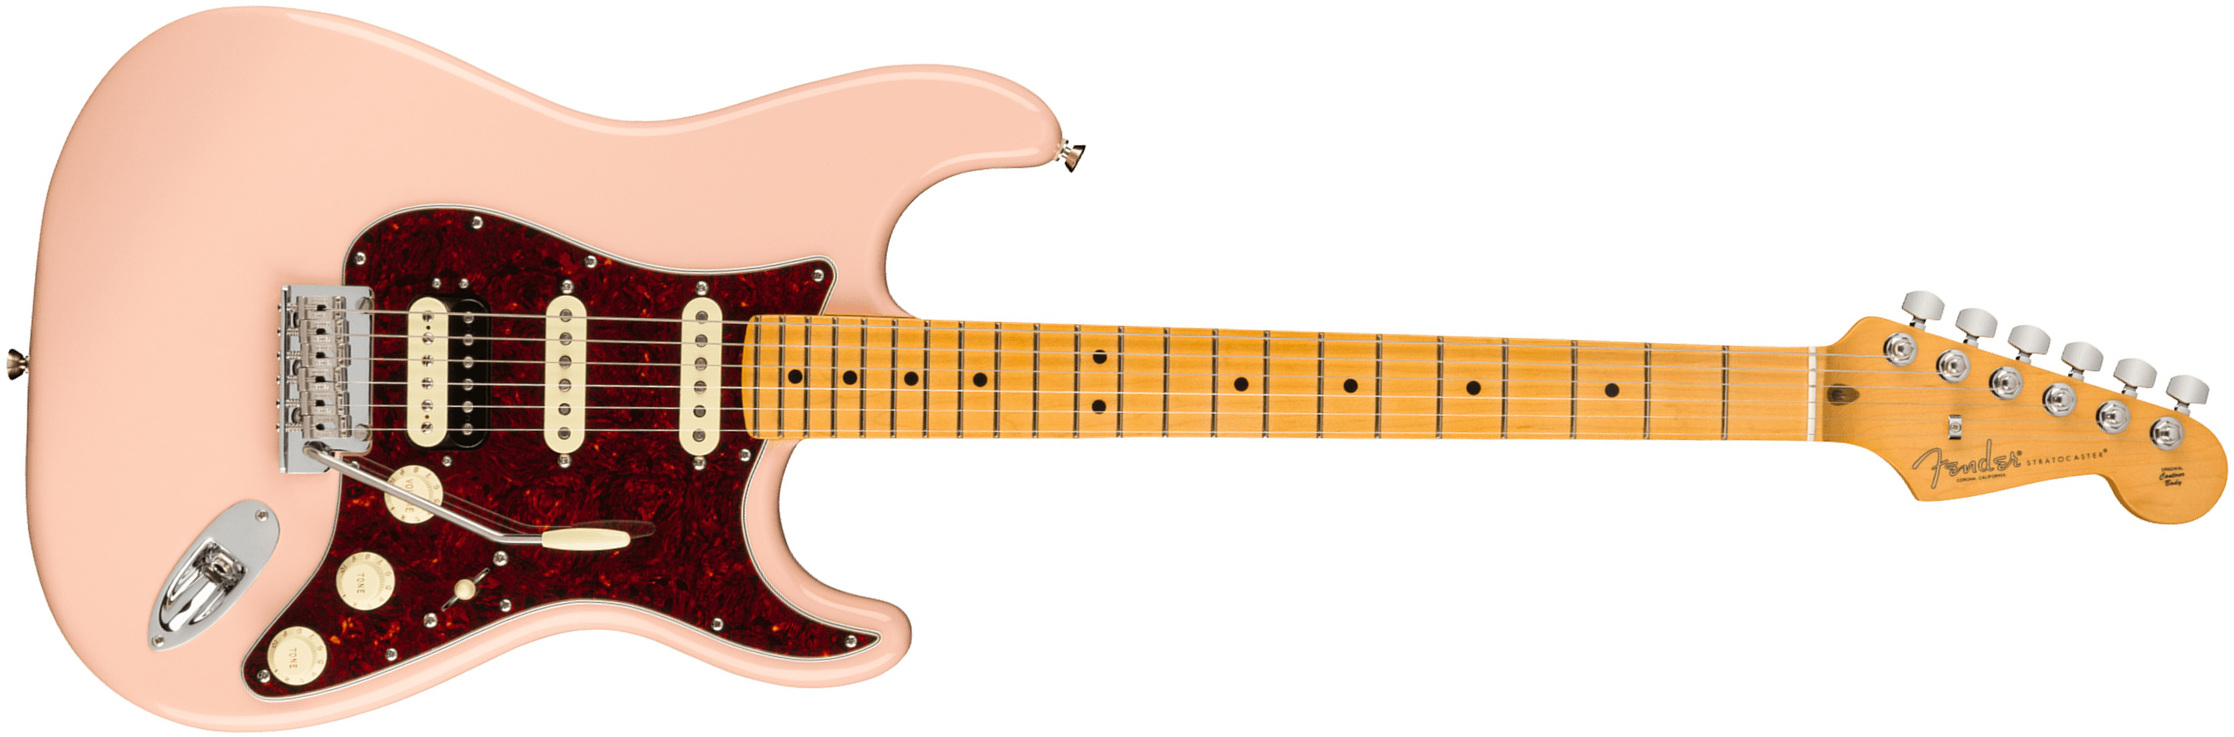 Fender Strat American Pro Ii Ltd Hss Trem Mn - Shell Pink - Elektrische gitaar in Str-vorm - Main picture